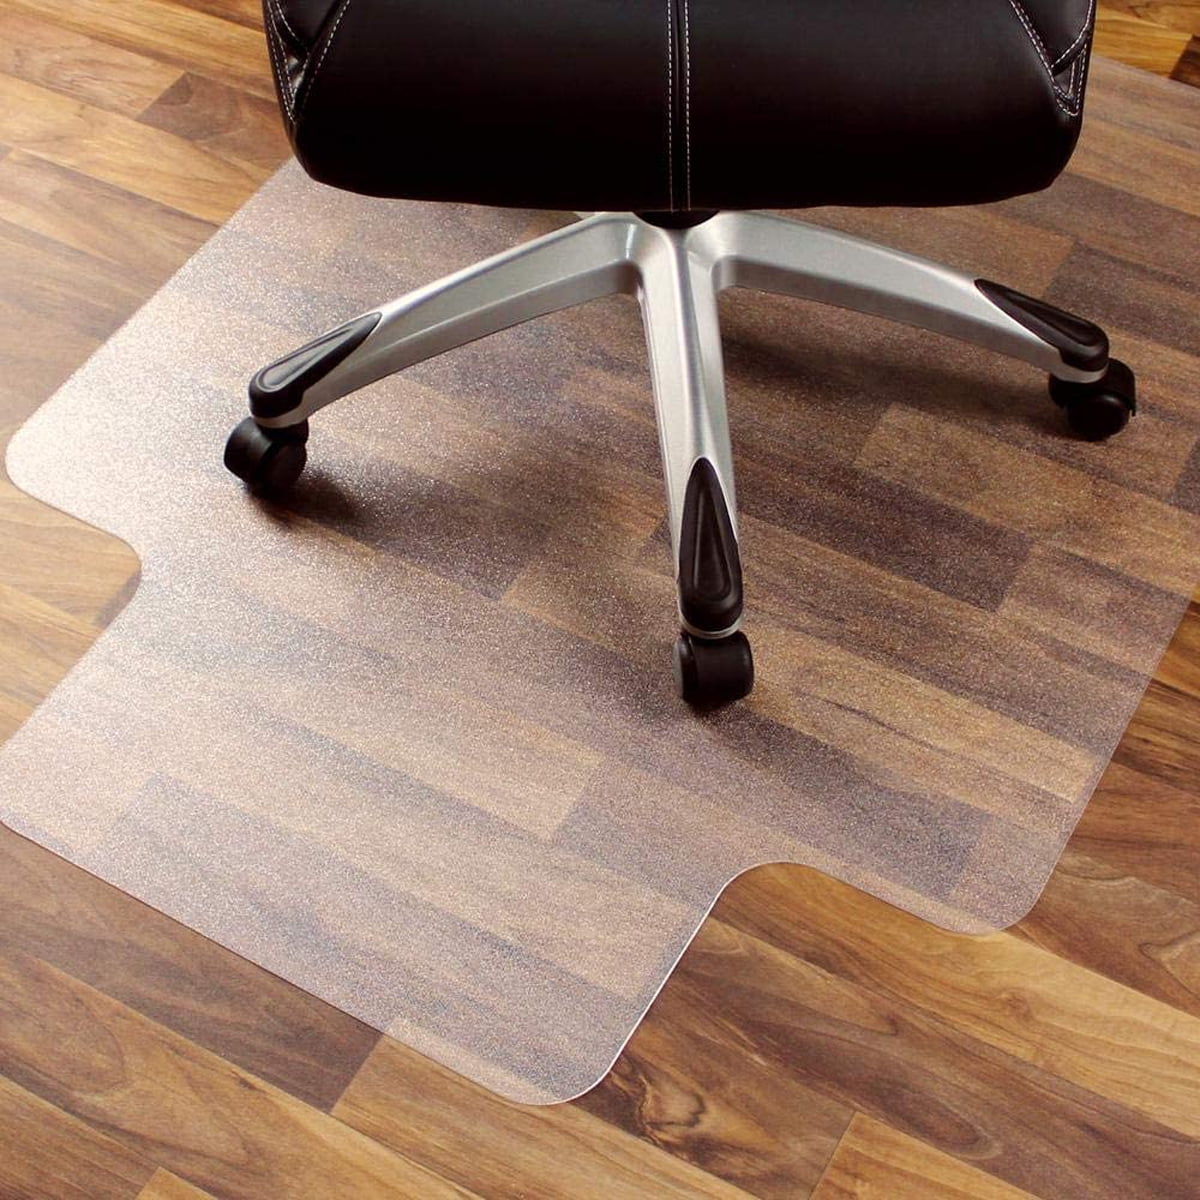 Basics Polycarbonate Anti-Slip Hard Floor Chair Mat 47 x 30 